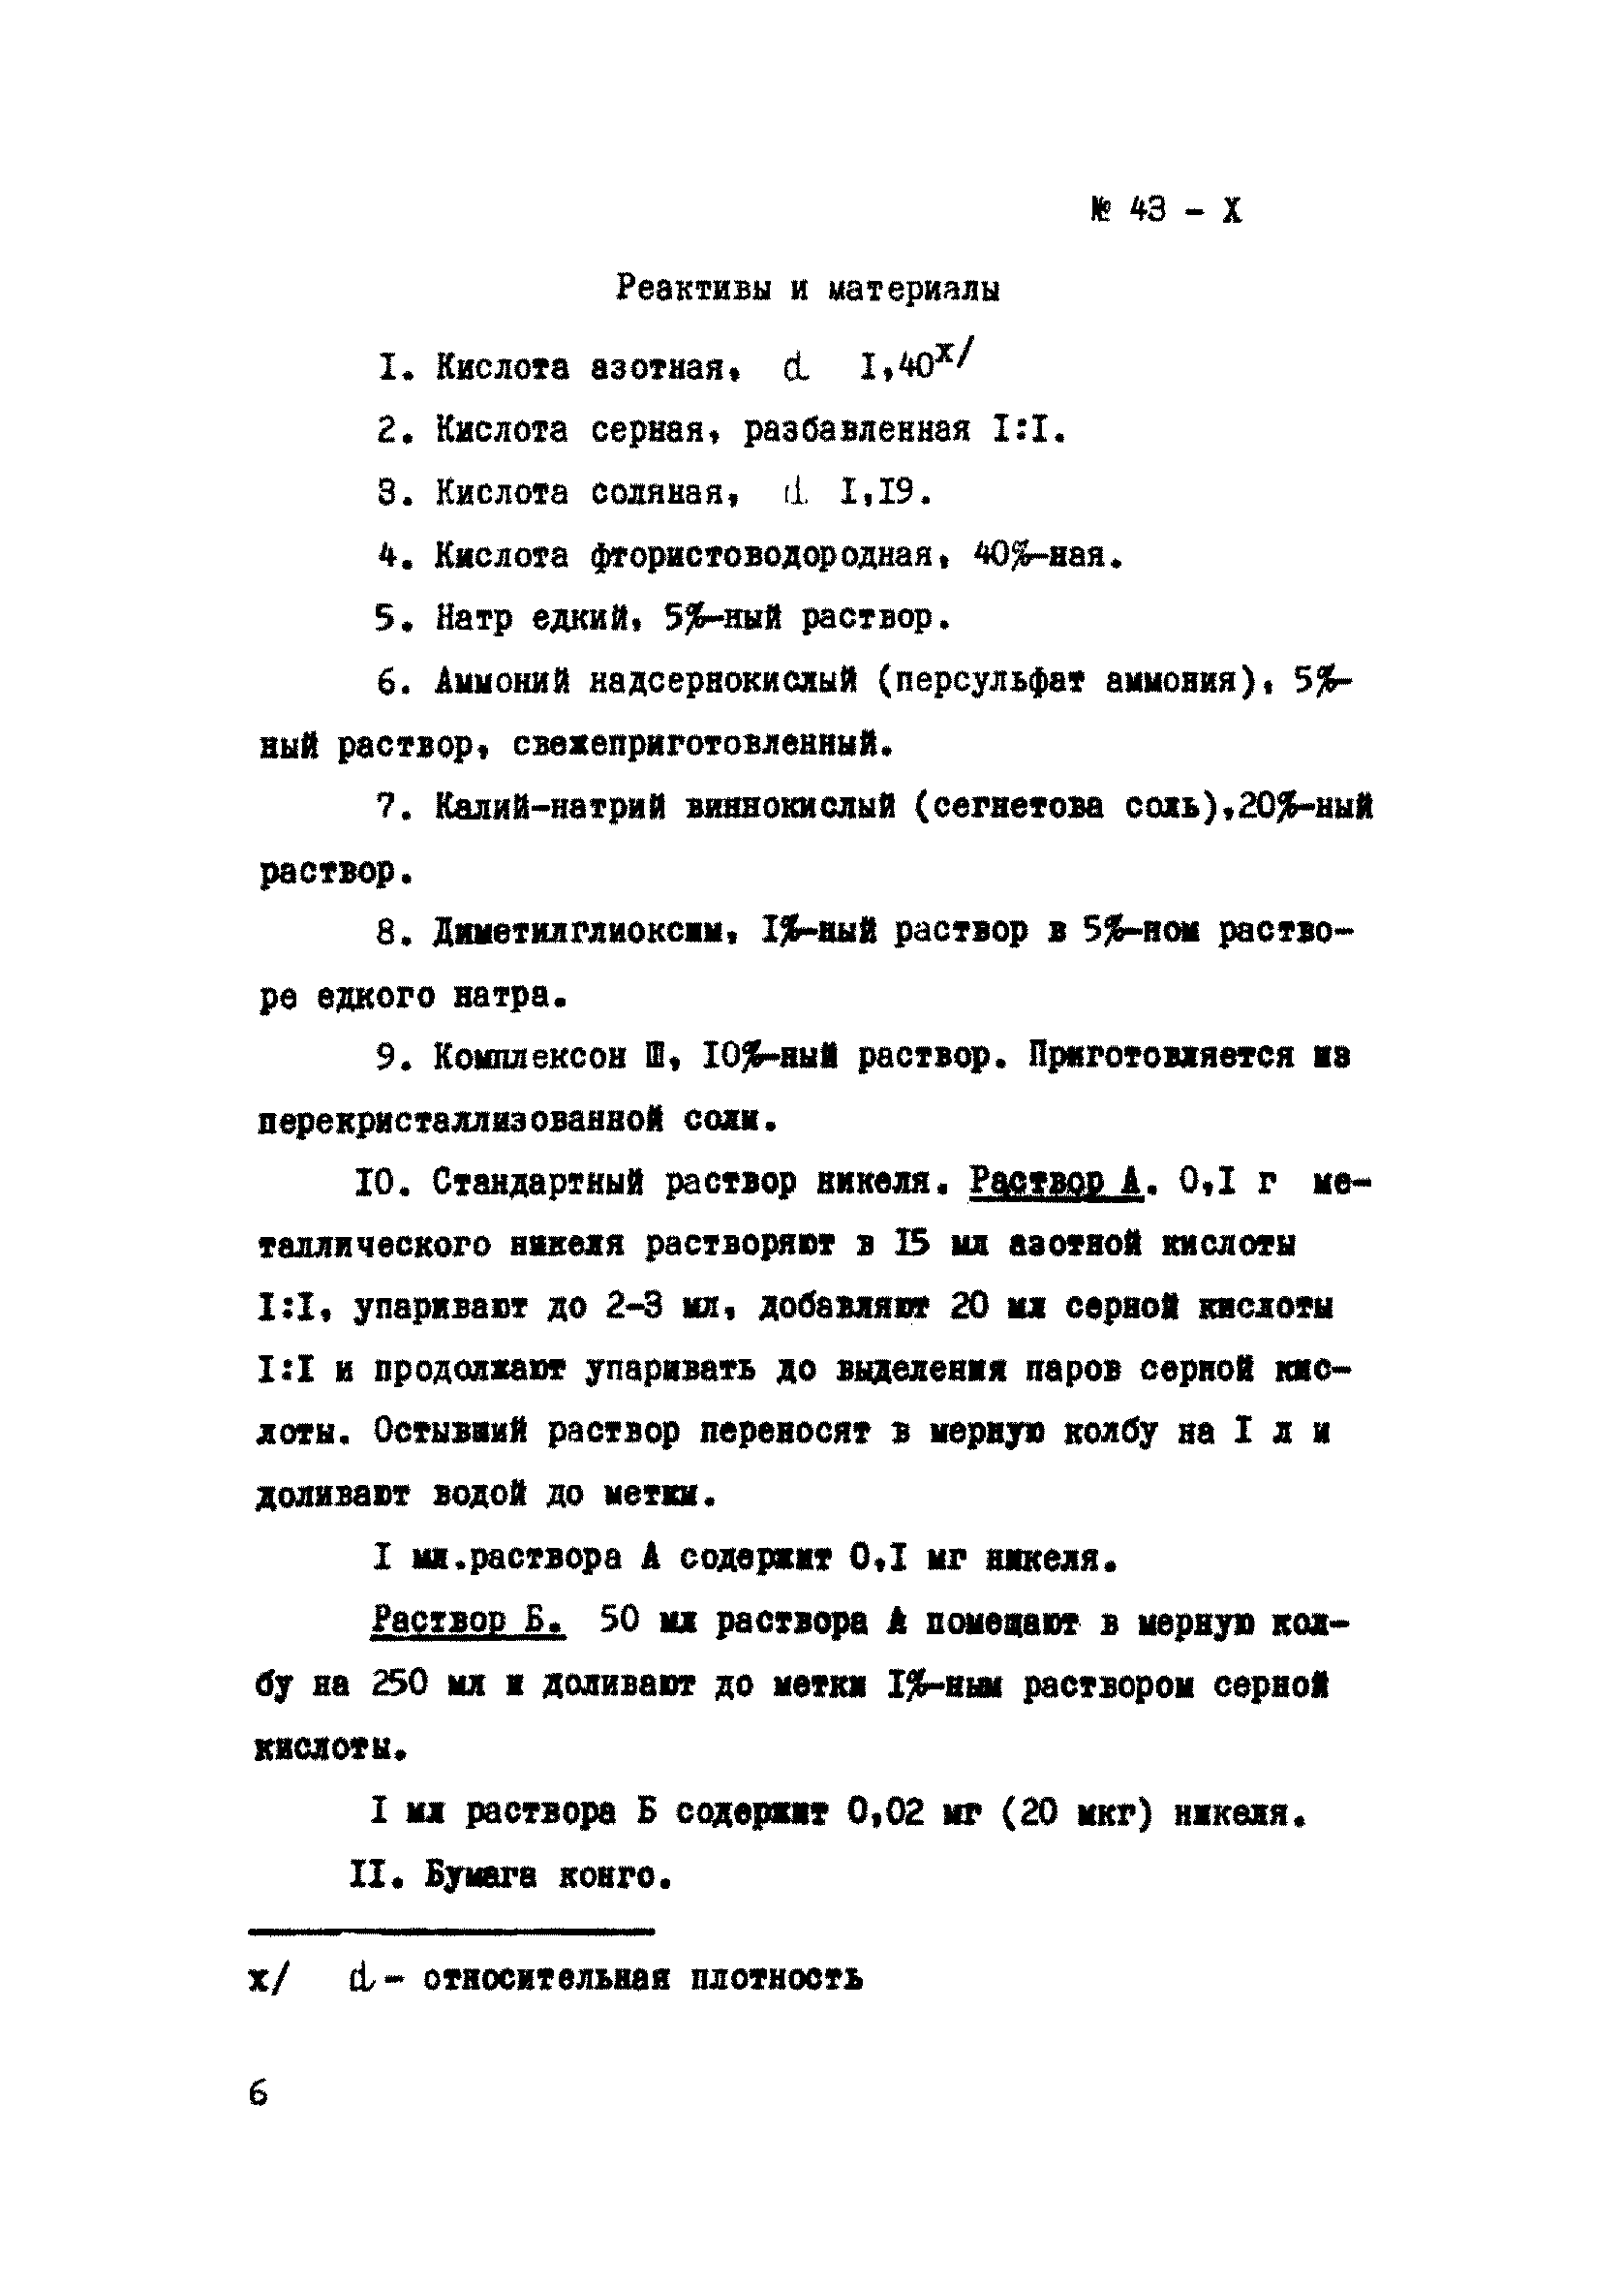 Инструкция НСАМ 43-Х